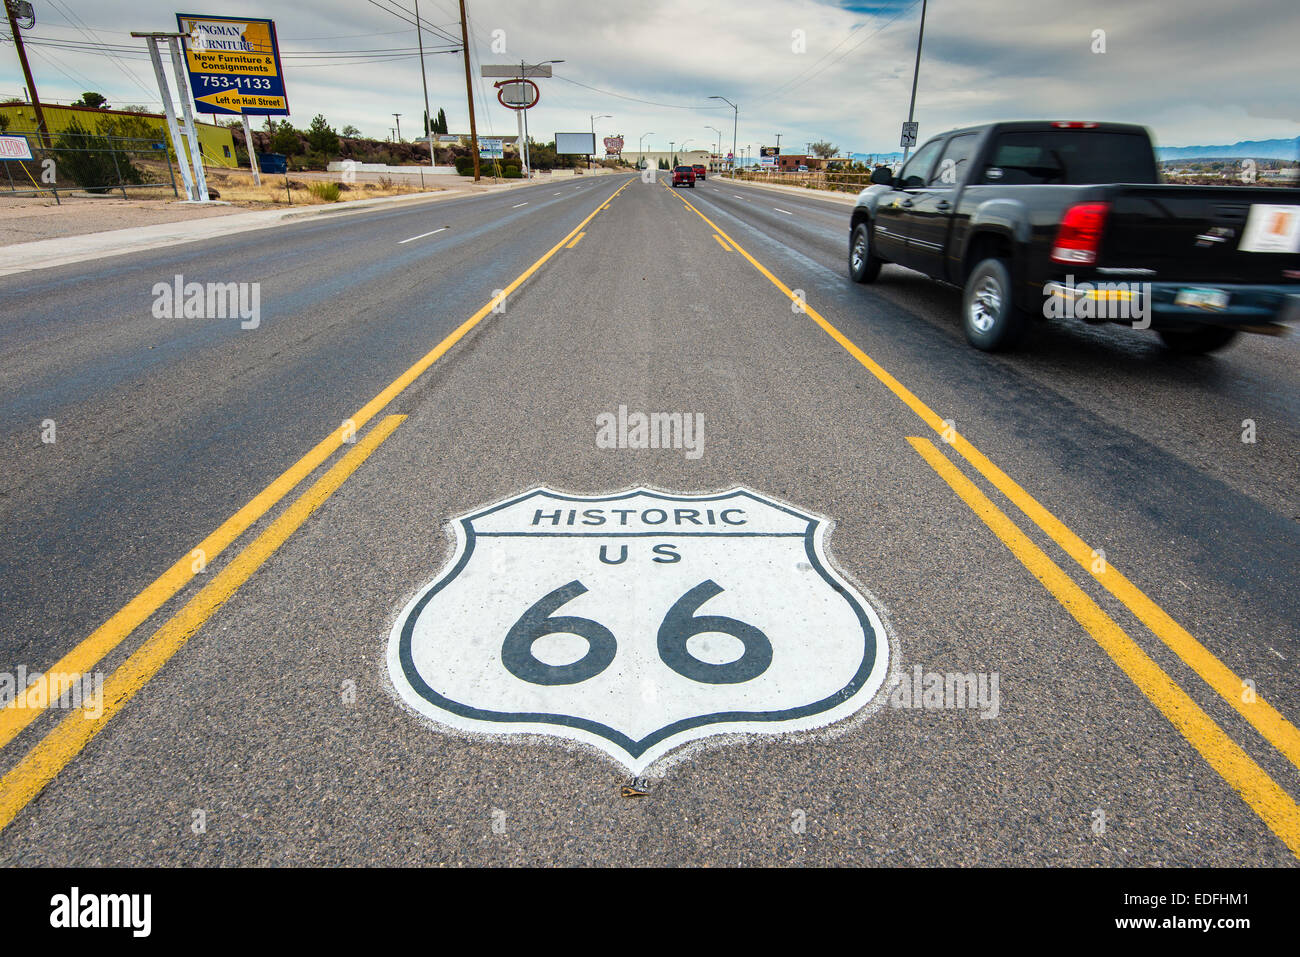 Historical U.S. Route 66 horizontal road sign, Kingman, Arizona, USA Stock Photo